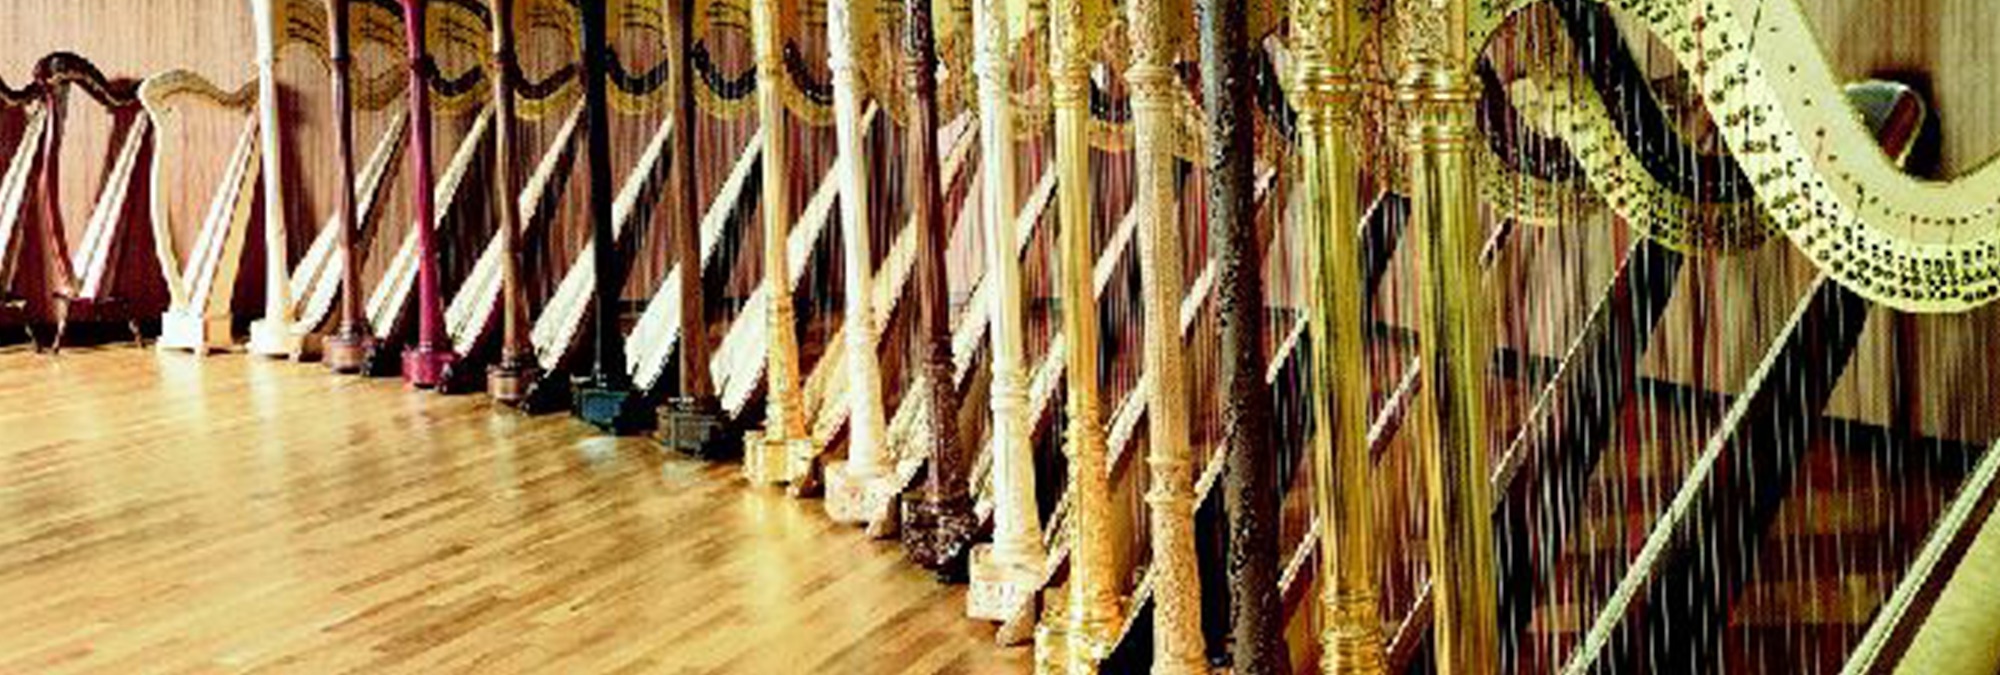 Row of Harps